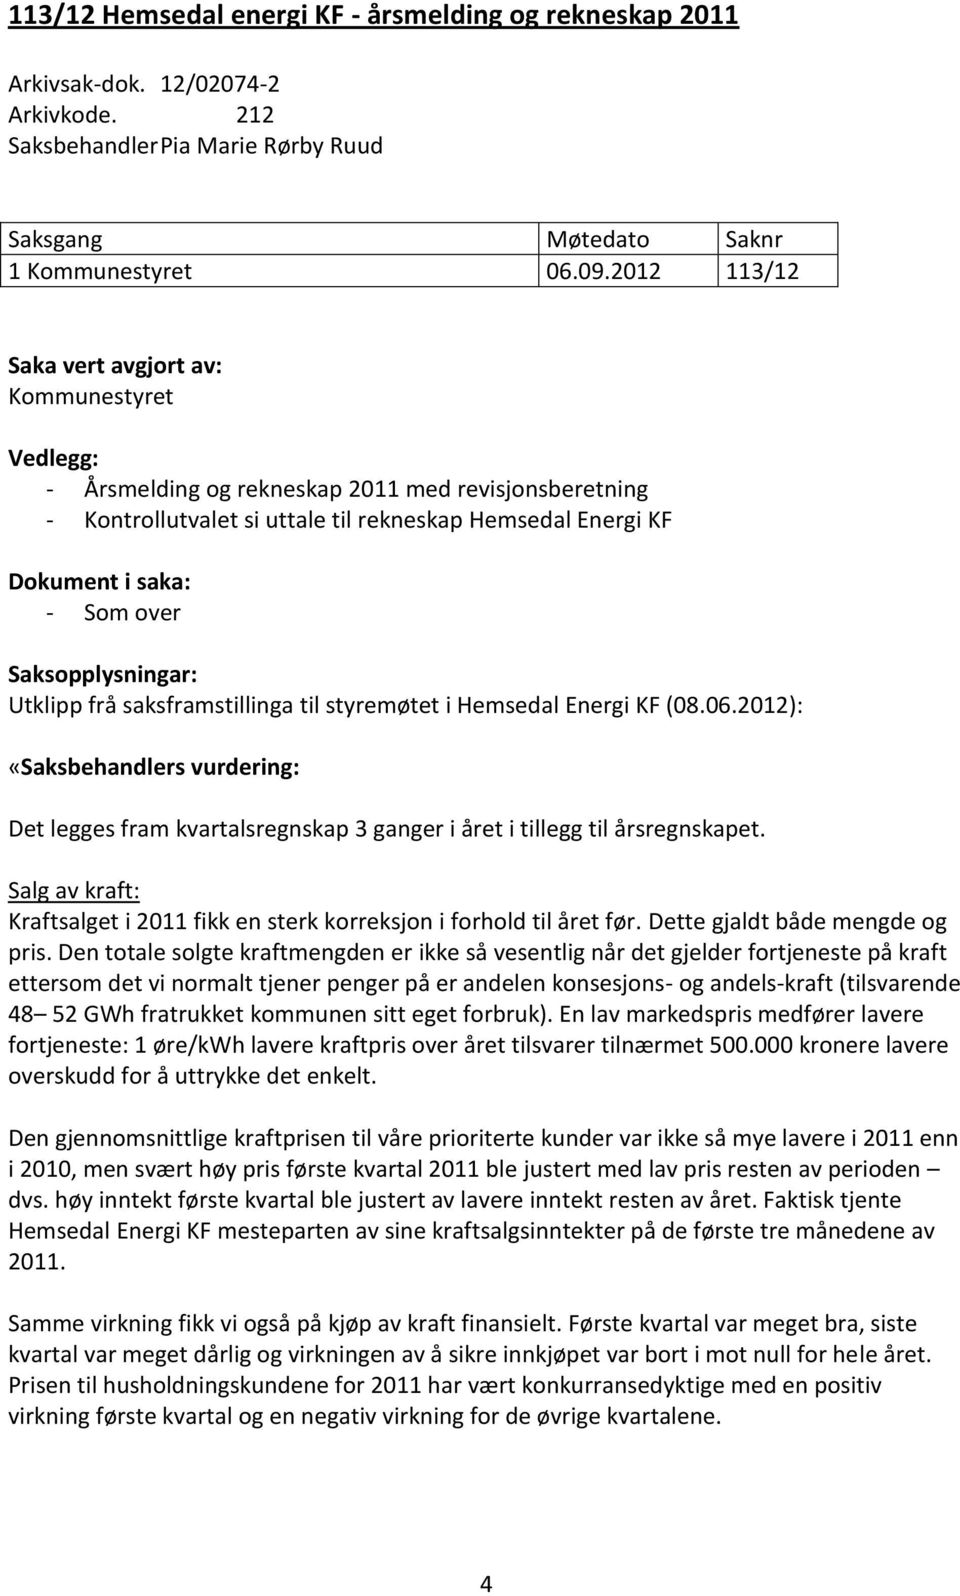 Saksopplysningar: Utklipp frå saksframstillinga til styremøtet i Hemsedal Energi KF (08.06.